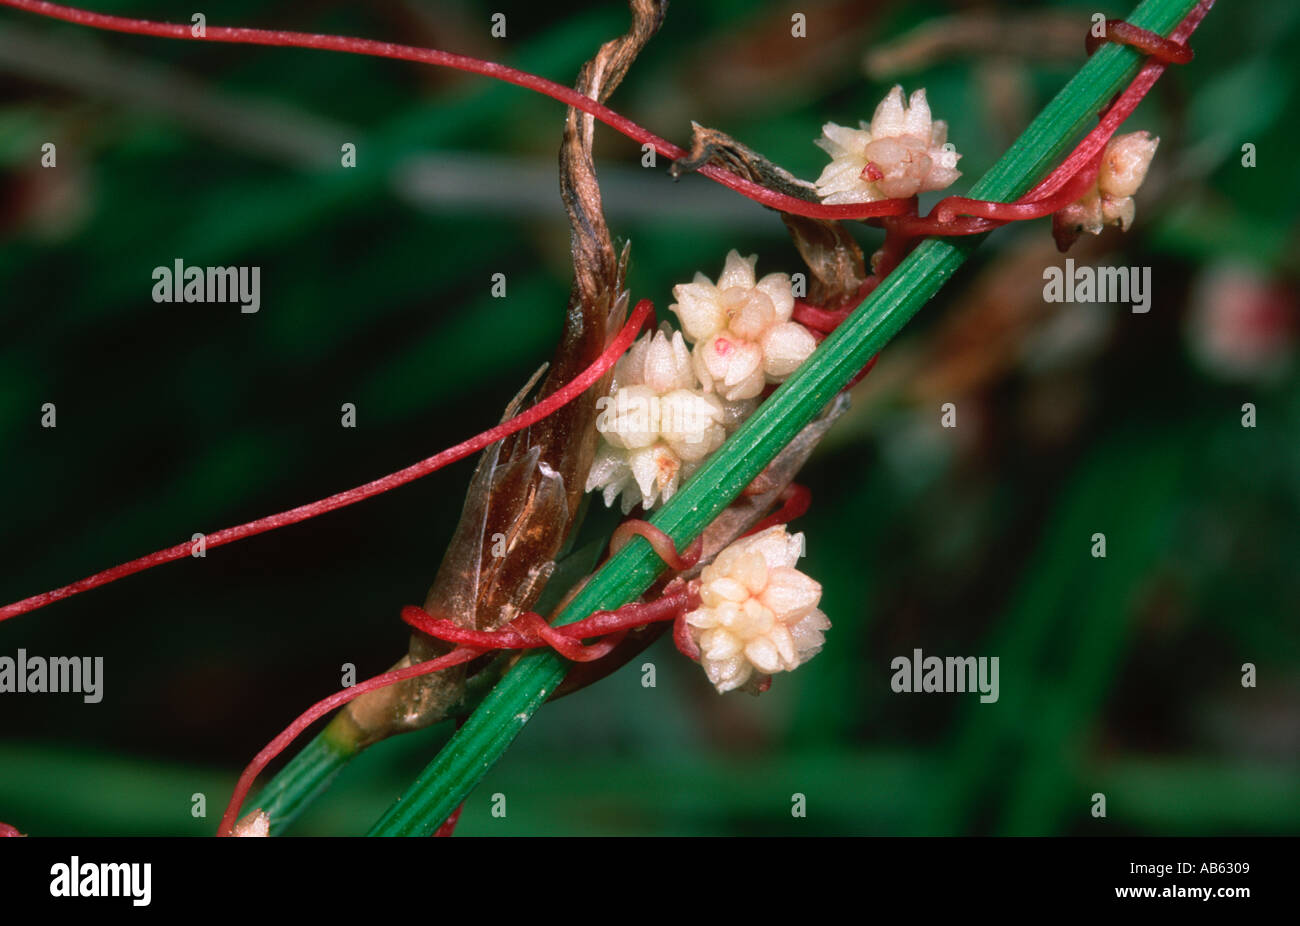 Cuscuta epithymum parasitic plant with flowers Stock Photo